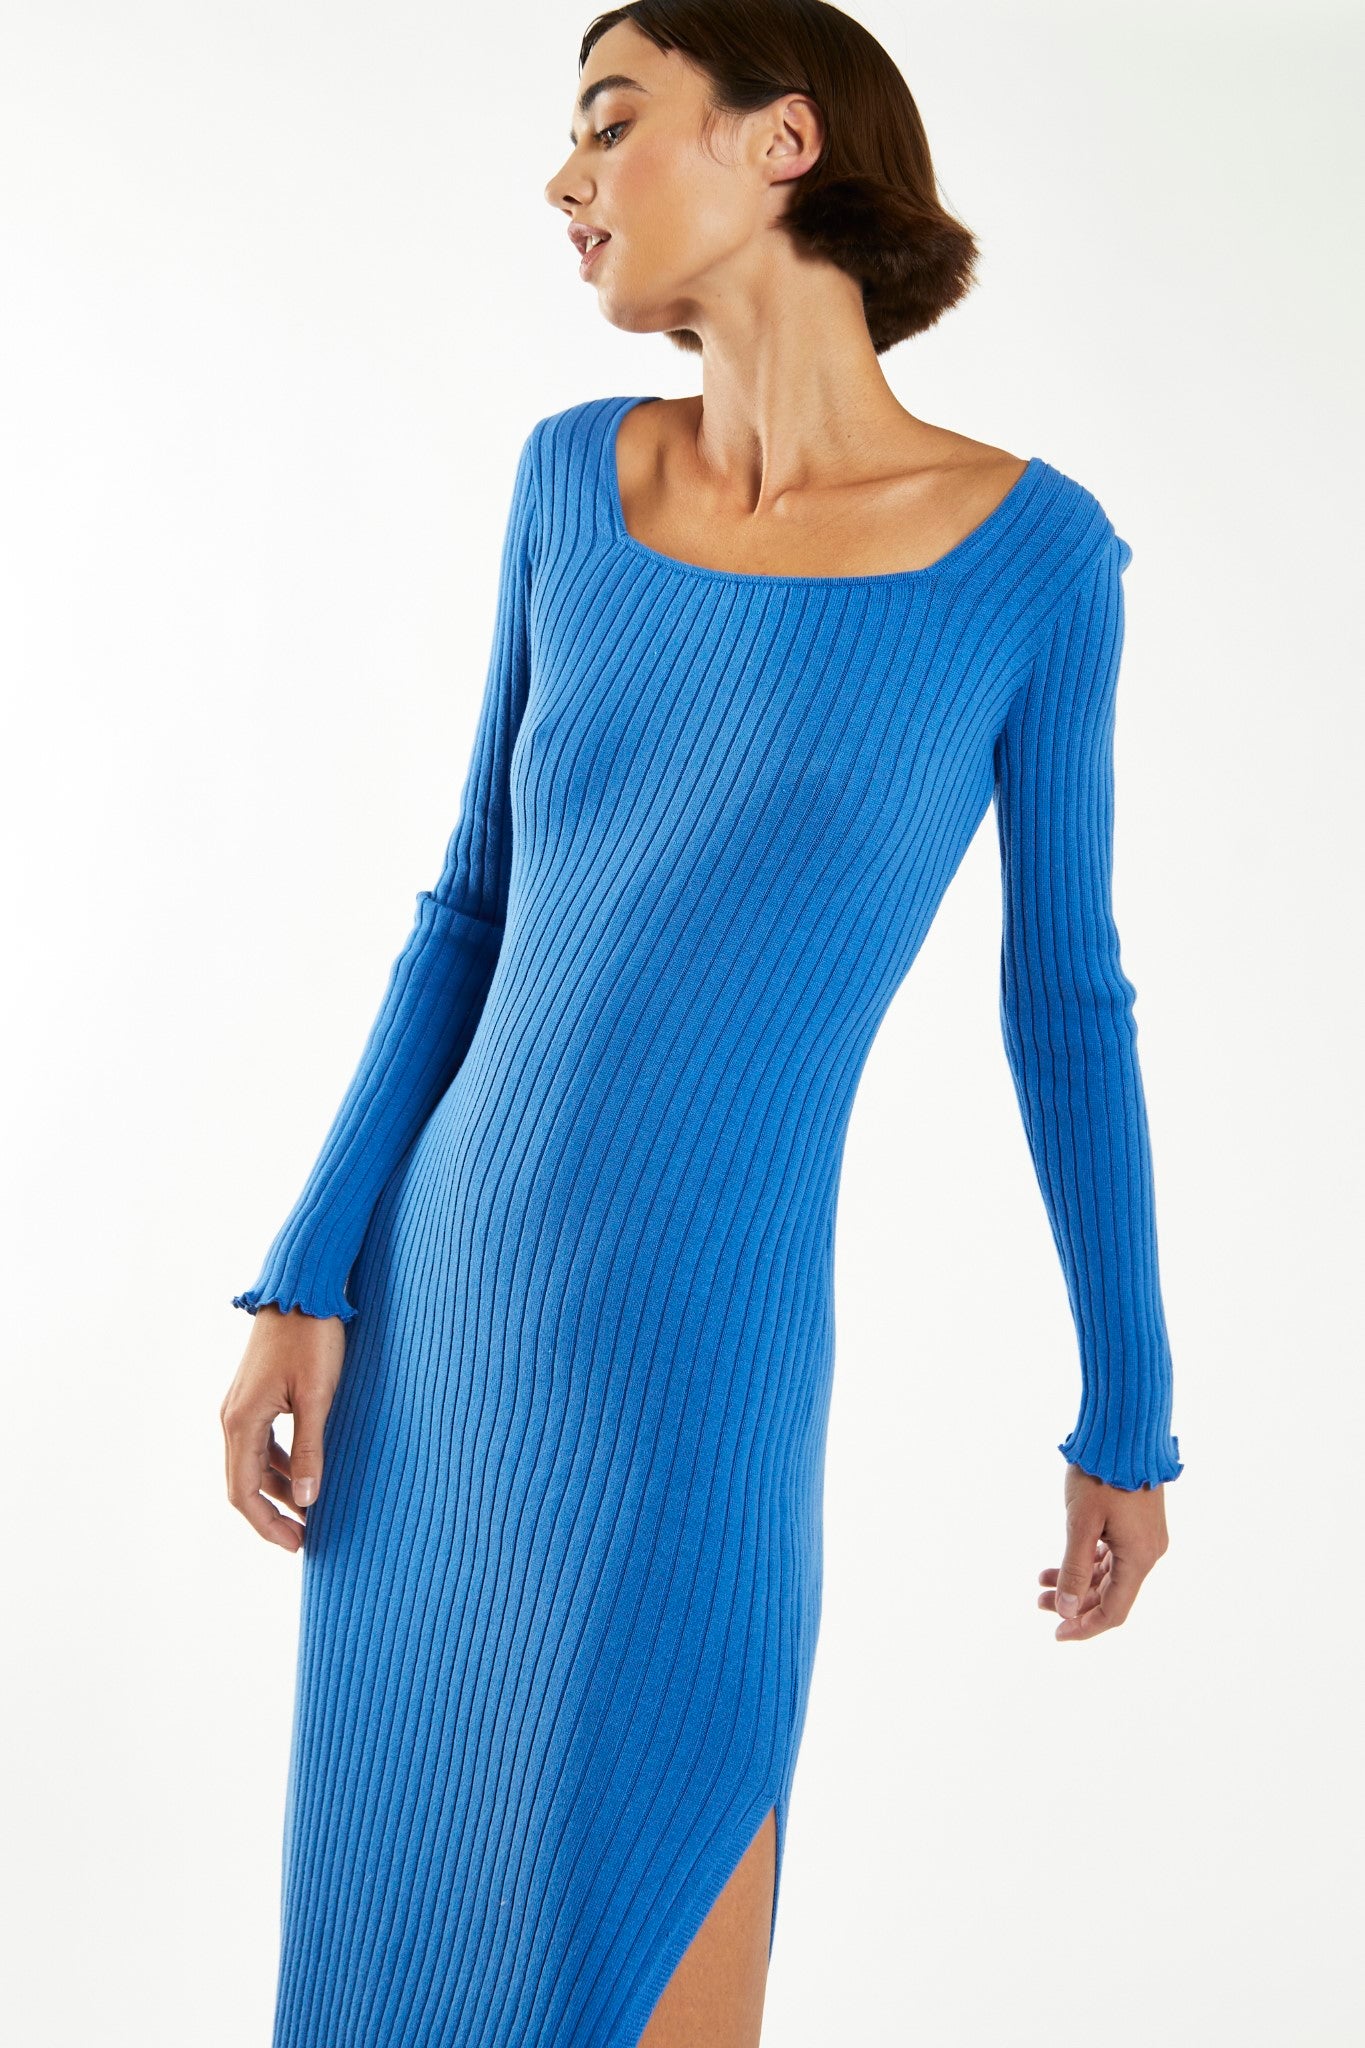 Ultramarine Blue Square-Neck Knit Midi-Dress